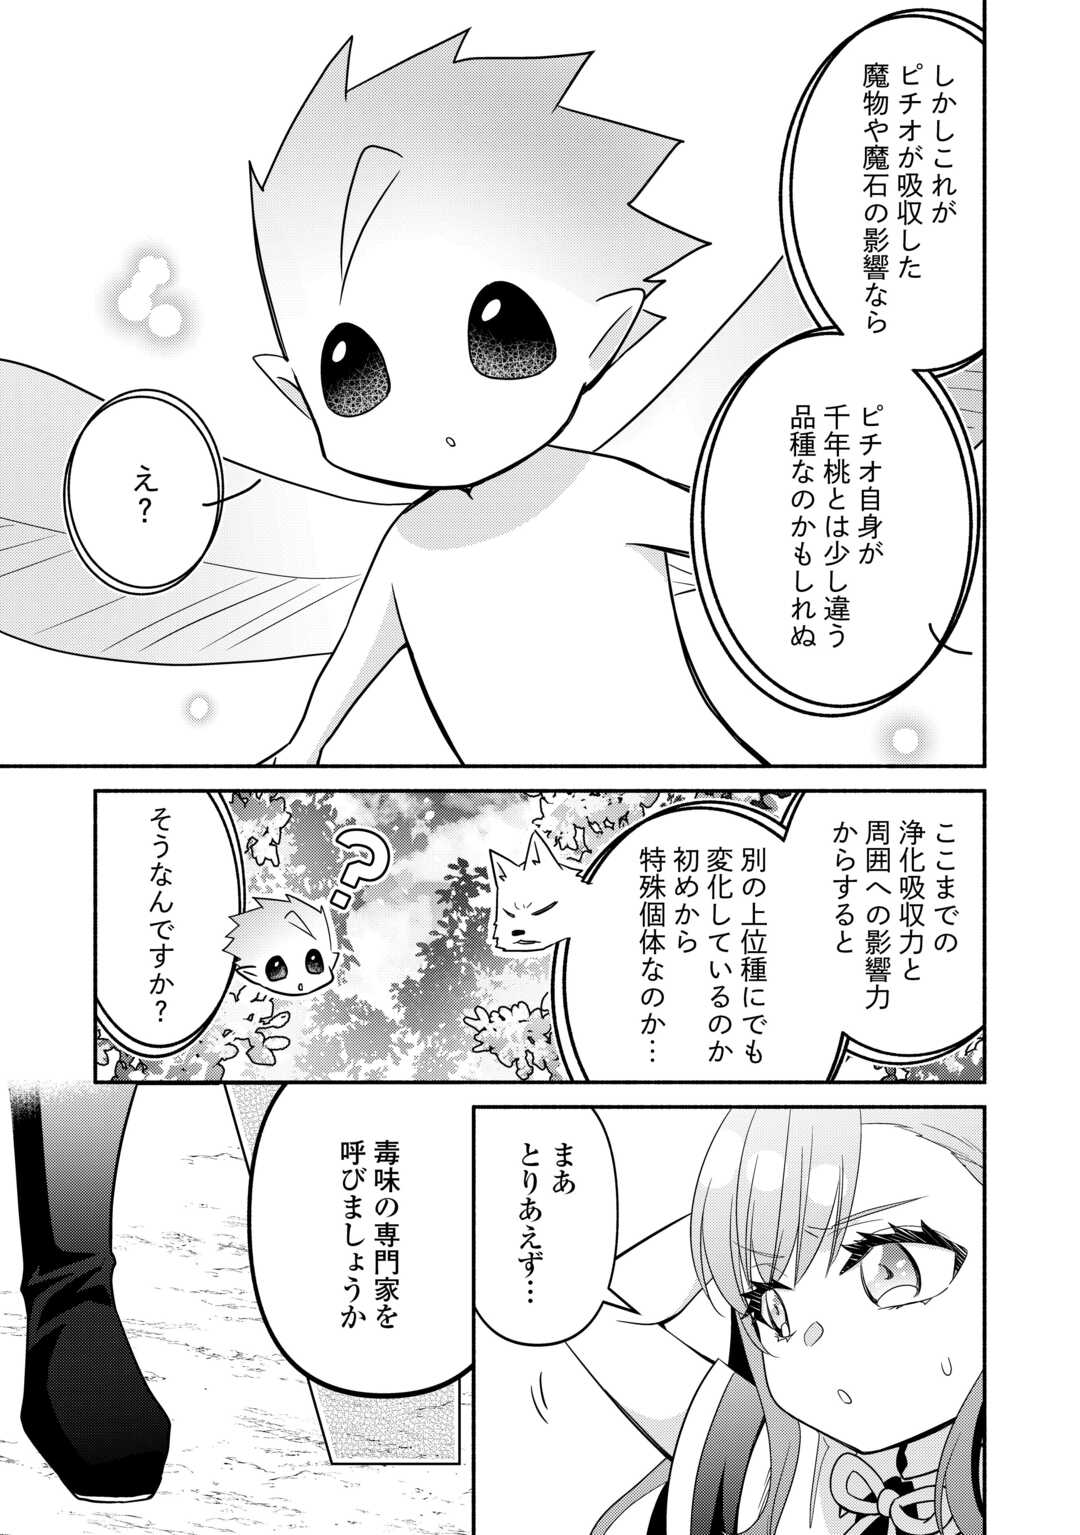 Tensei Youjo. Kamikemono to Ouji to, Saikyou no Ojisan Youhei-dan no Naka de Ikiru. - Chapter 24 - Page 5